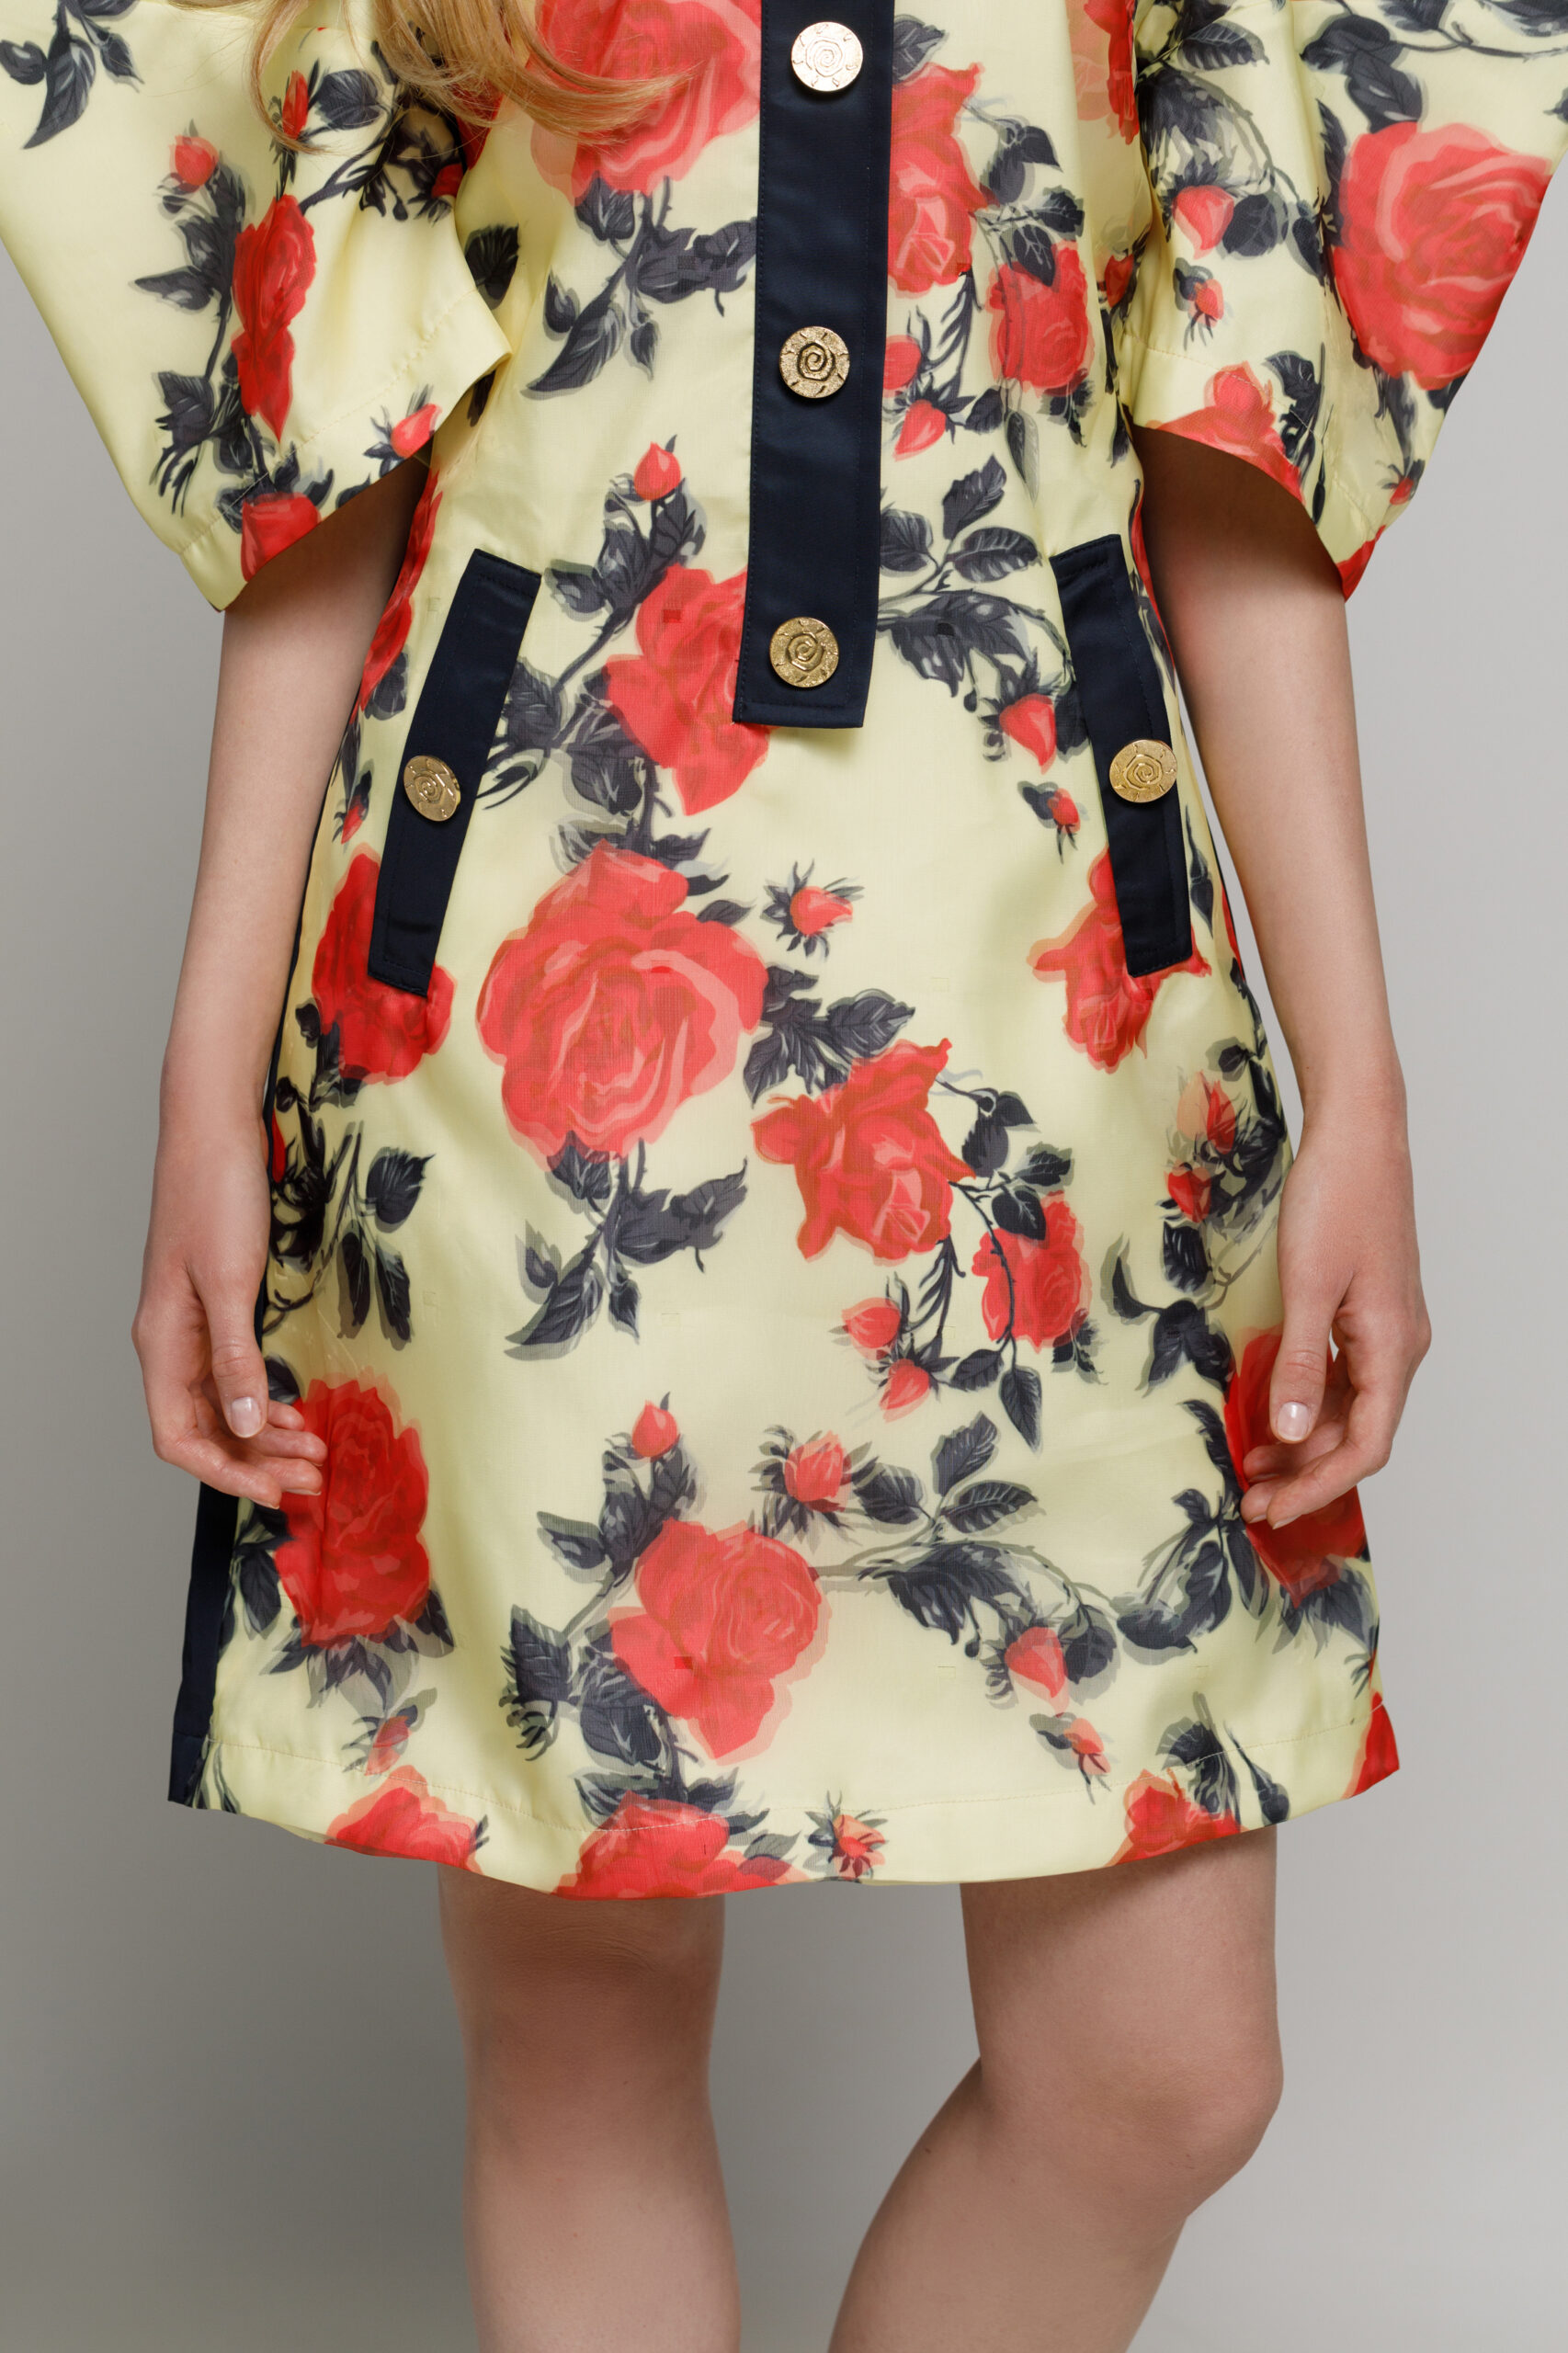 BELLA brocade dress with floral print. Natural fabrics, original design, handmade embroidery